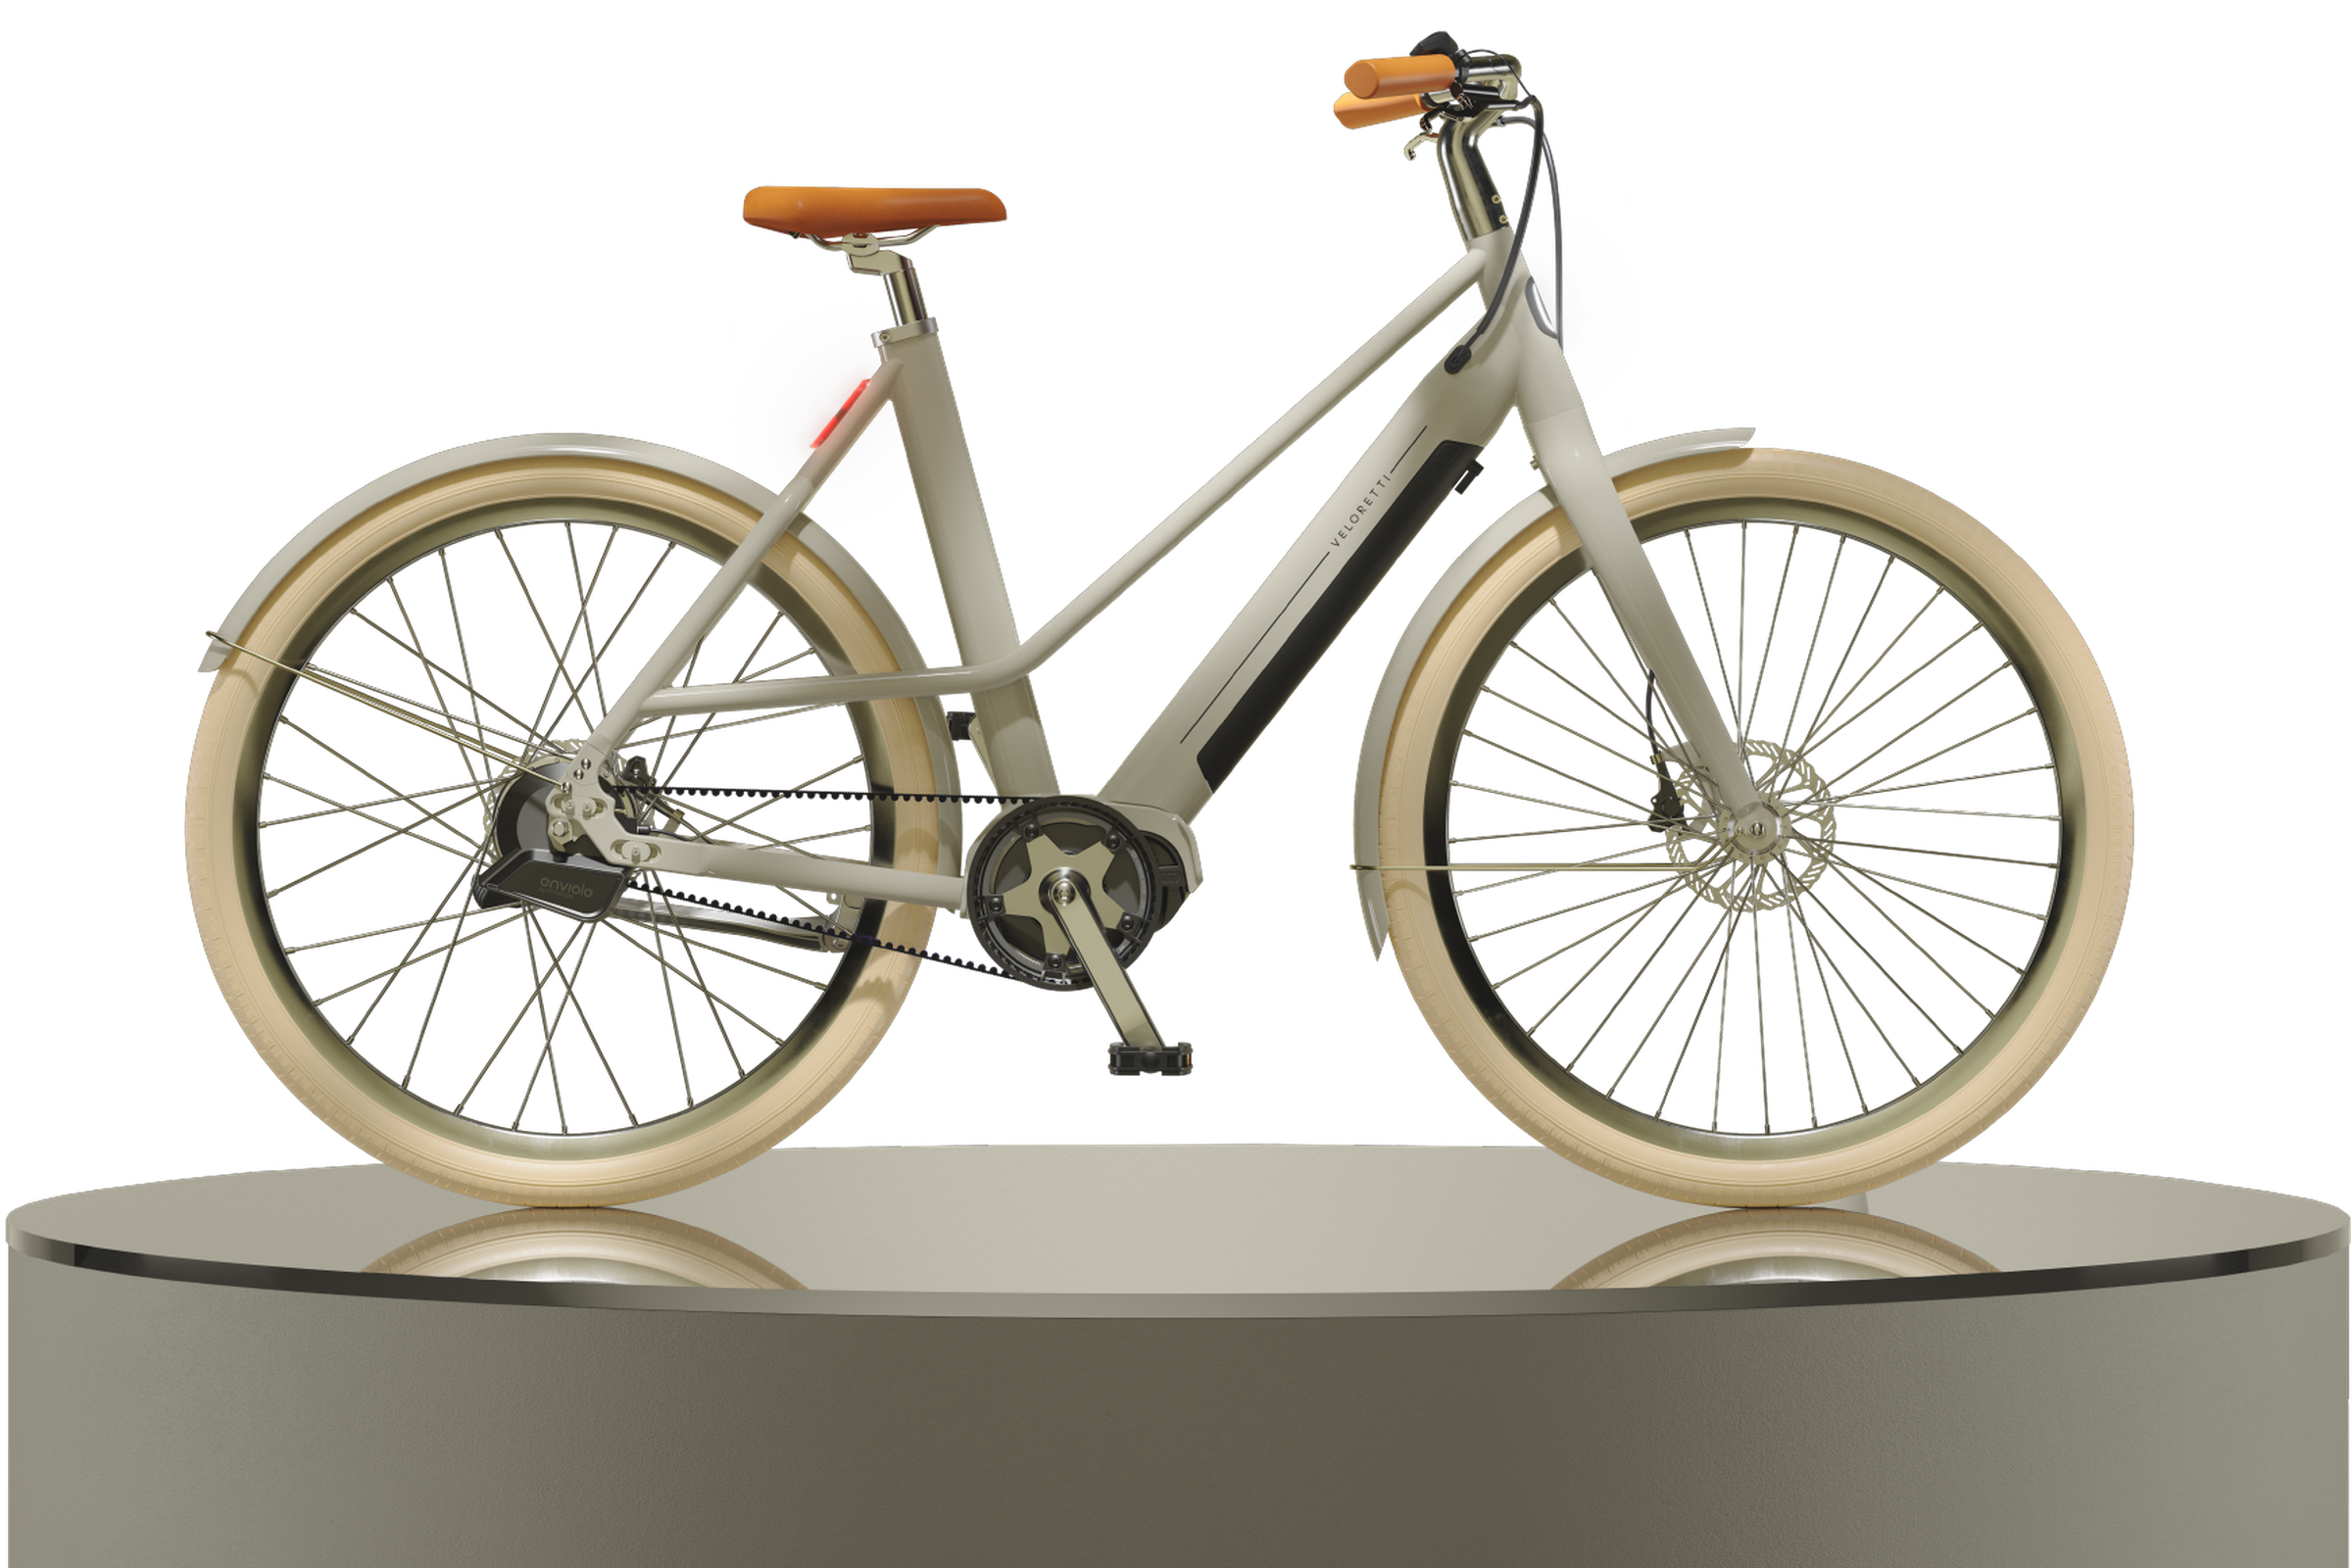 The Veloretti Ivy e-bike in pebble grey, swoon.